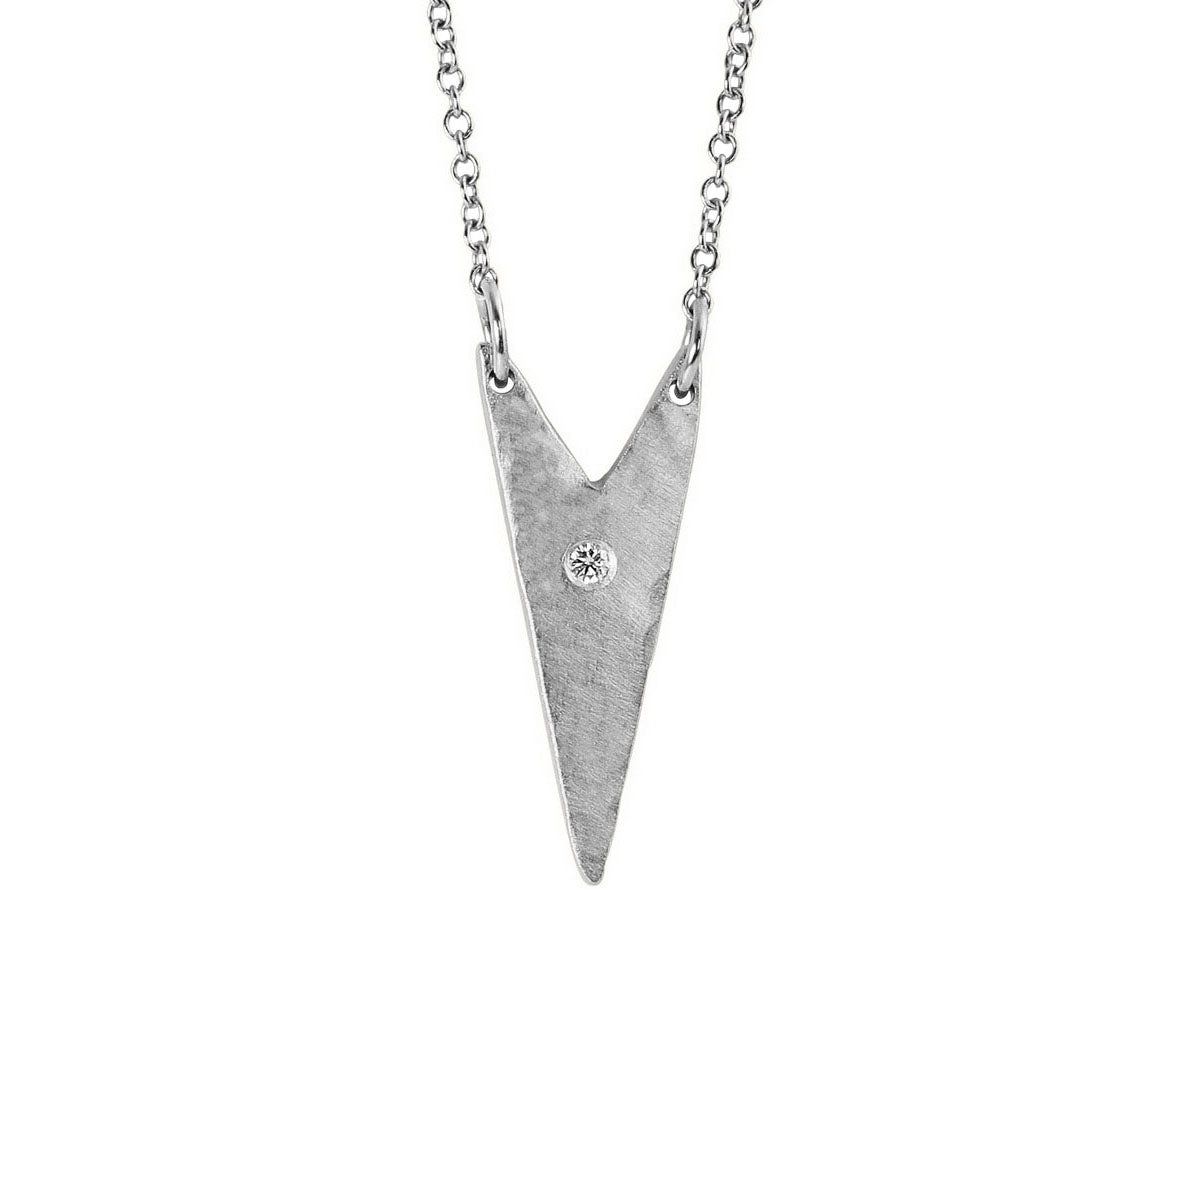 14k white gold NITA arrow necklace with center diamond